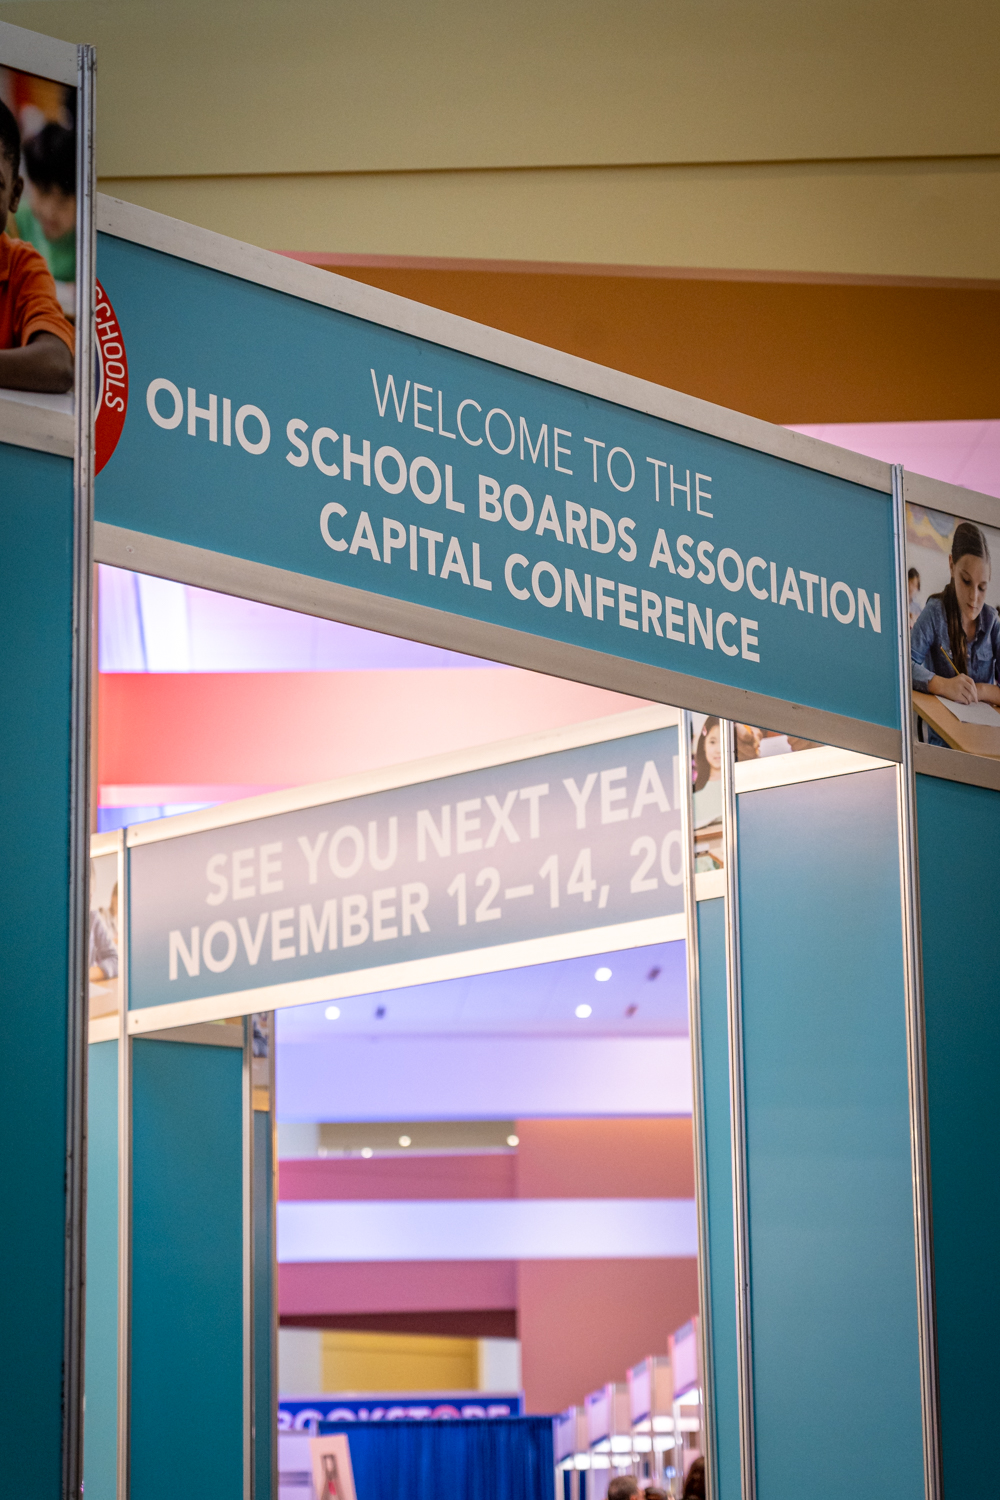 ThenDesign Architecture Attends Ohio School Board Association Capital